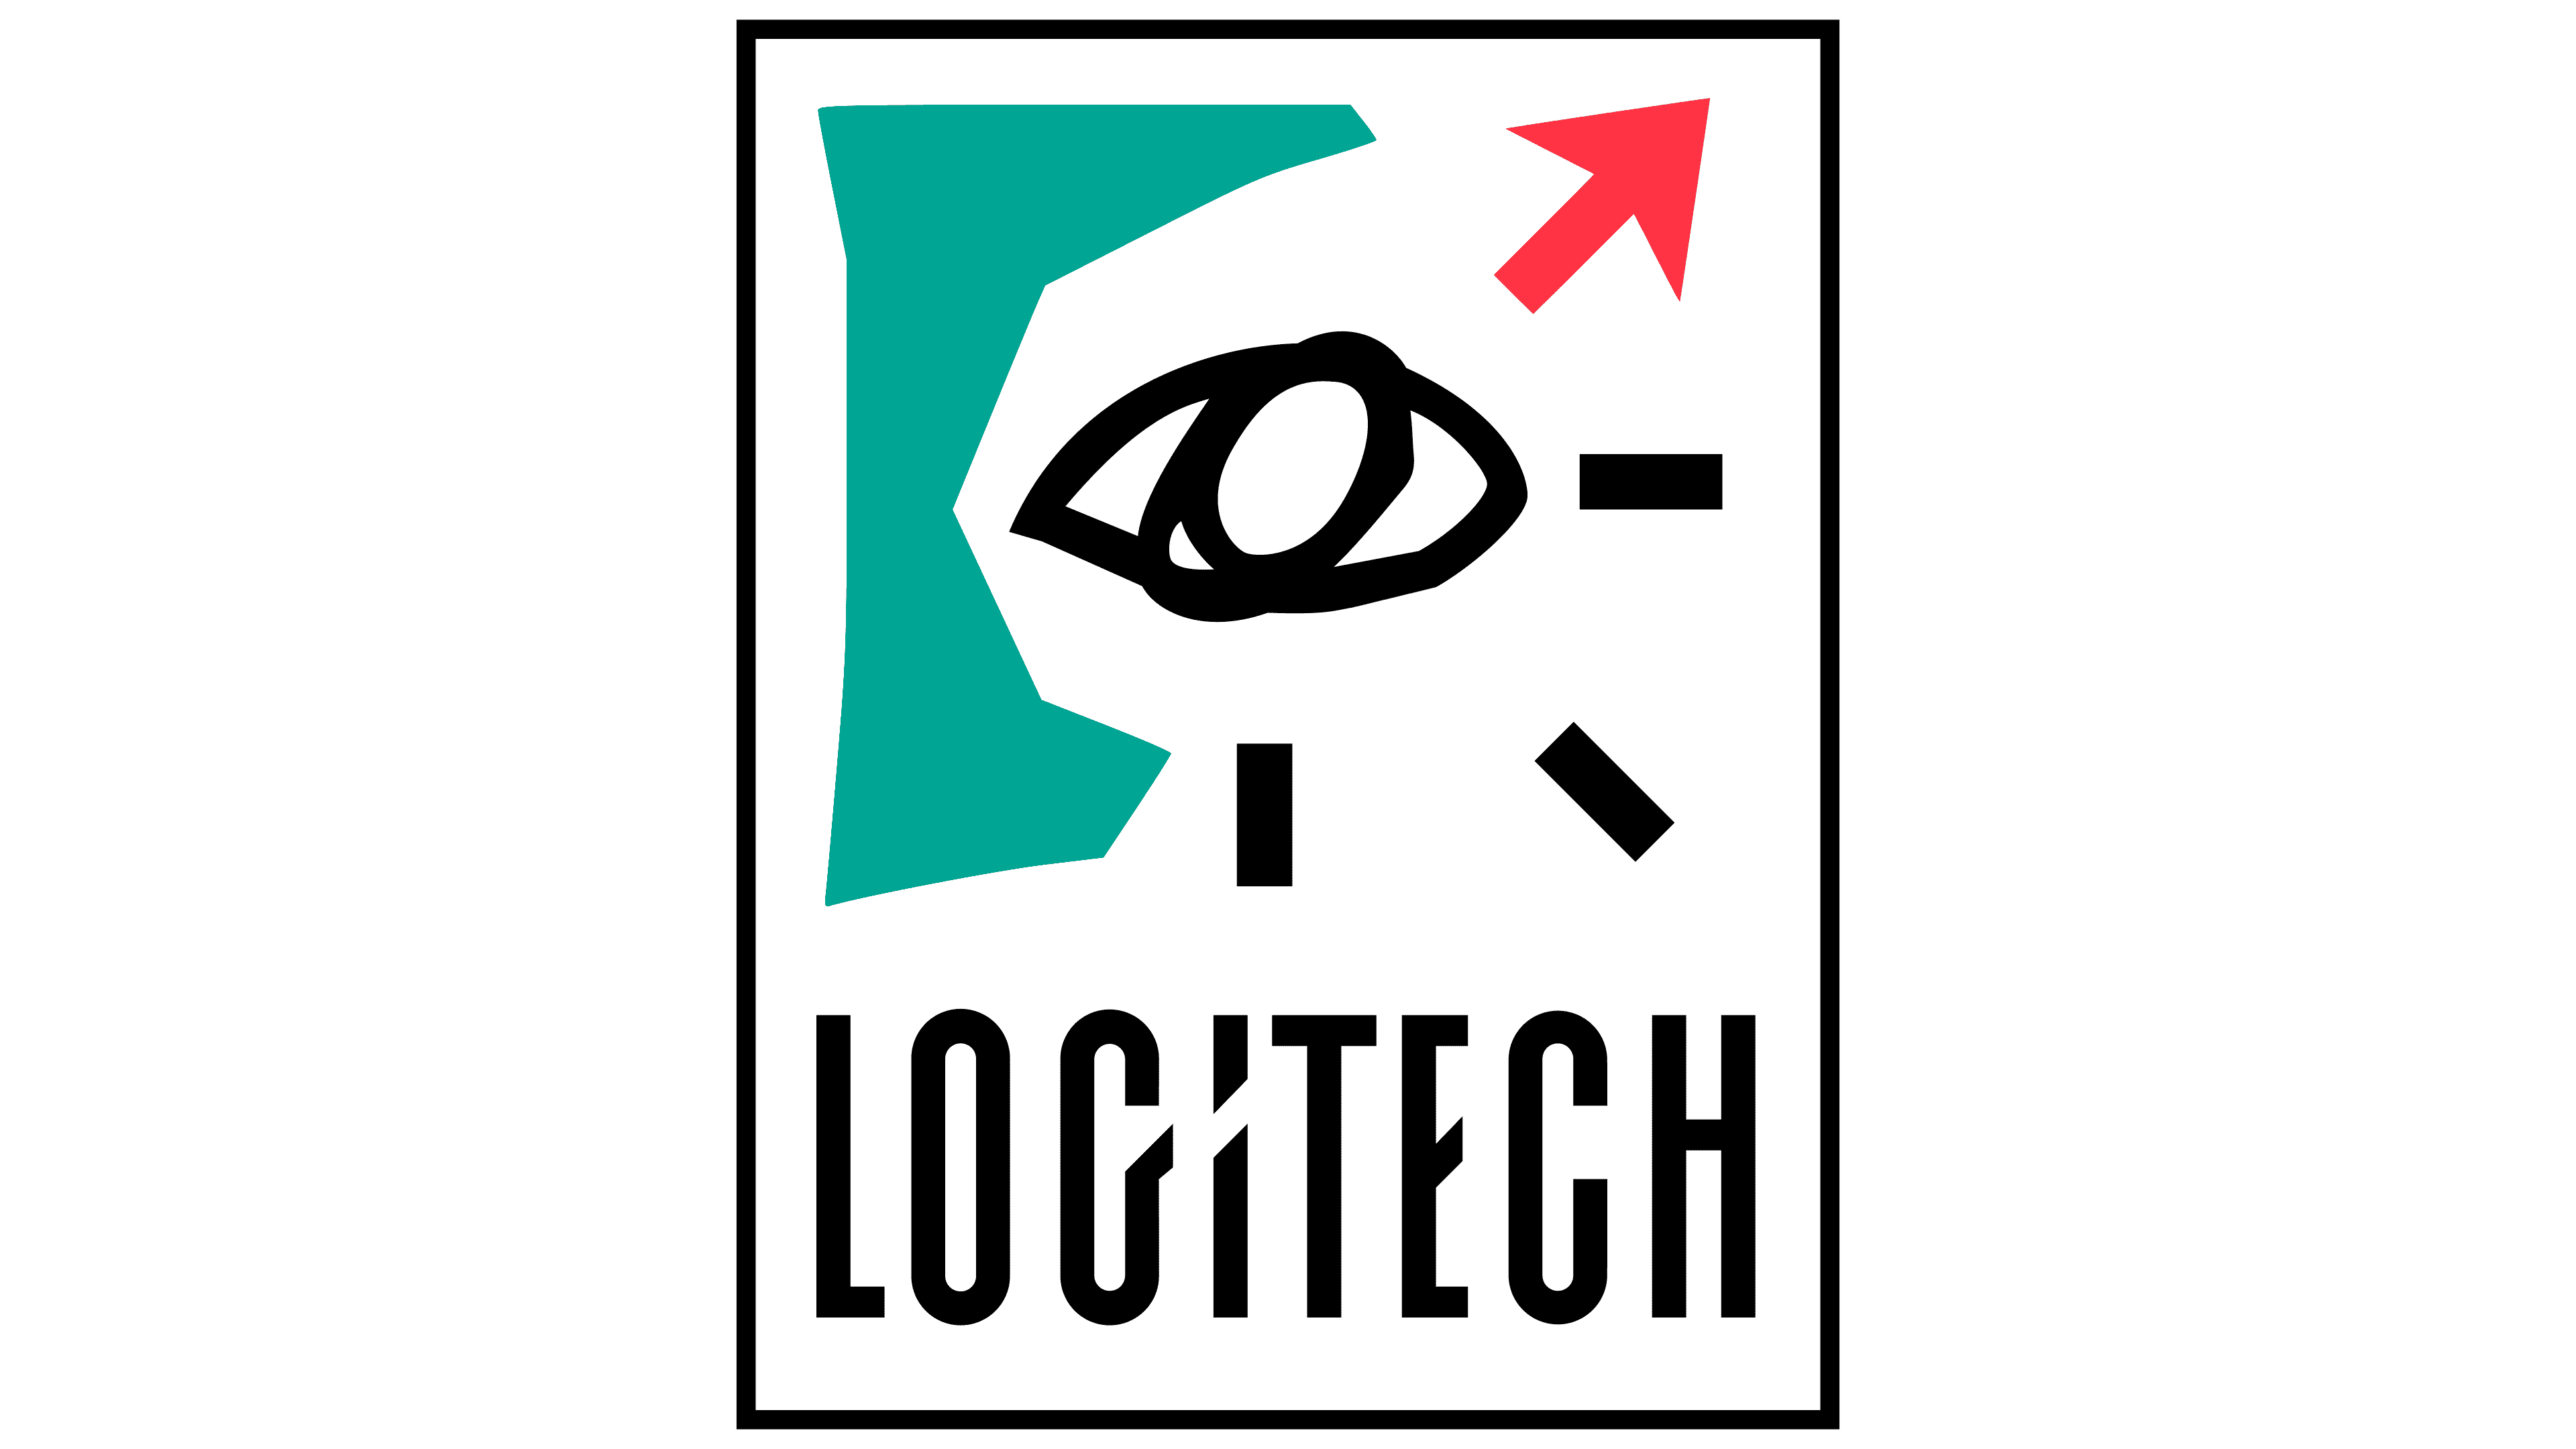 Logitech Logo History